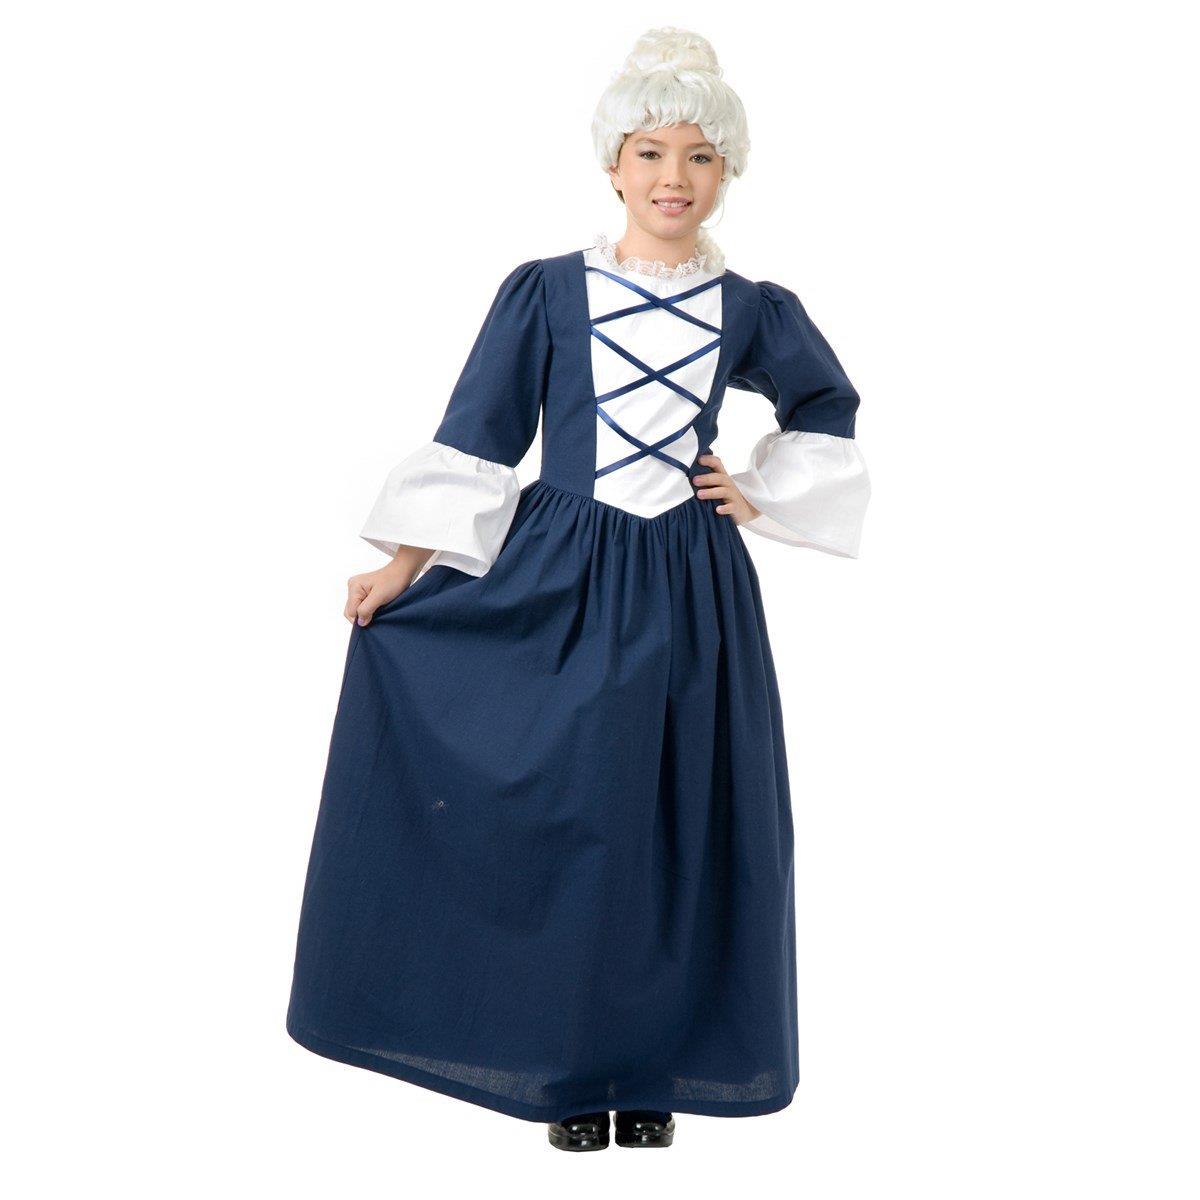 Picture of Charades Costumes 216983 Martha Washington Child Costume - Small